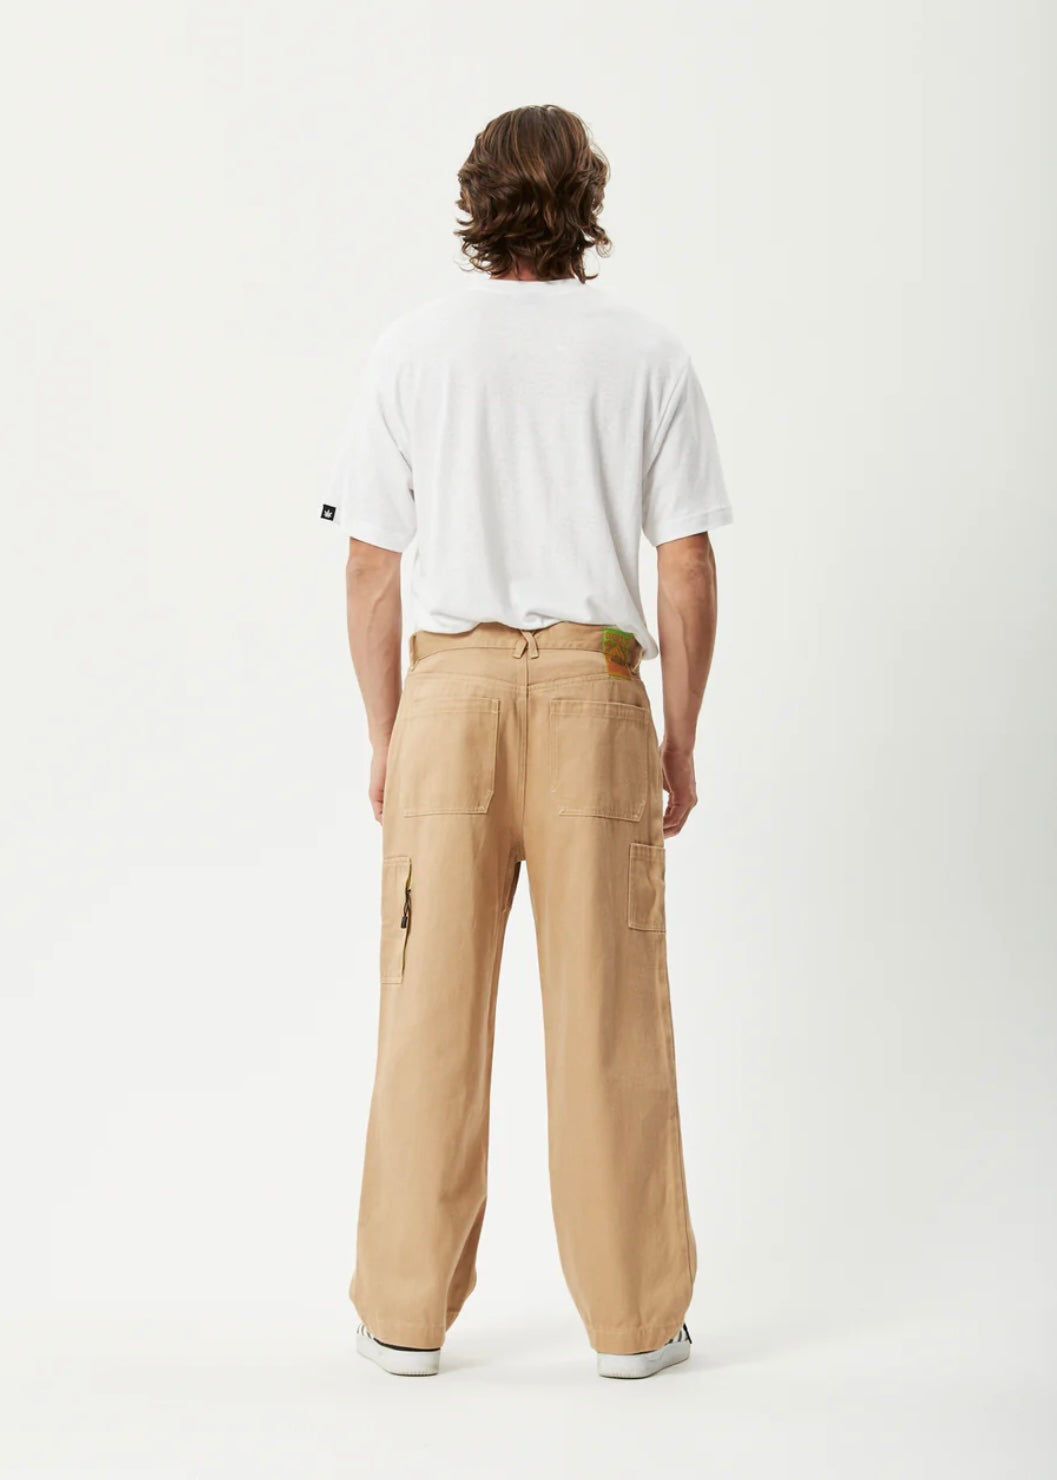 
                  
                    Sleepy Hollow Richmond - Hemp Twill Baggy Workwear Pants
                  
                